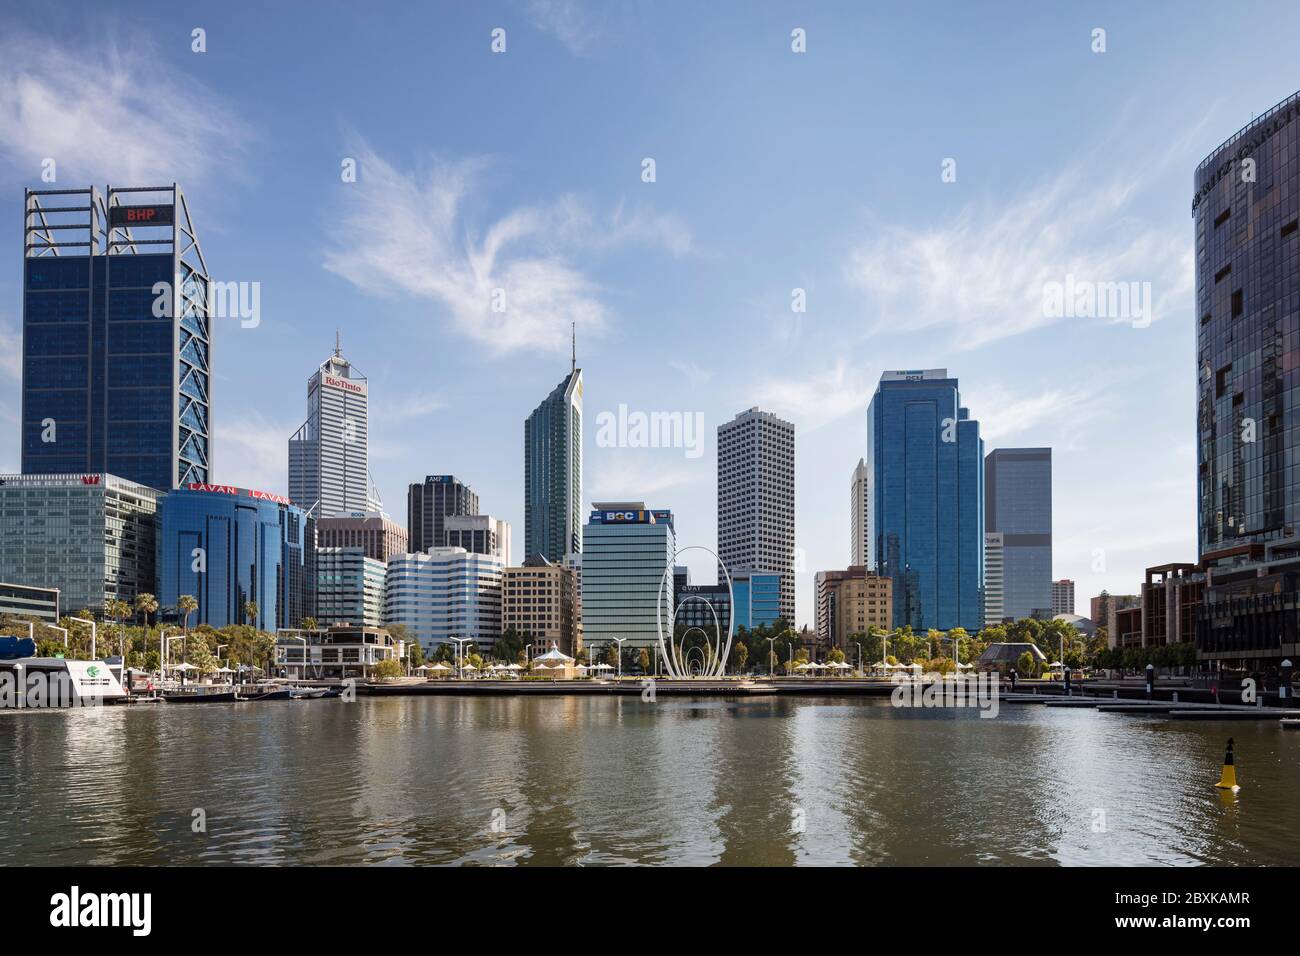 Perth Australia November 5th 2019: The iconic marina at Elizabeth Quay in Perth, Western Australia Stock Photo